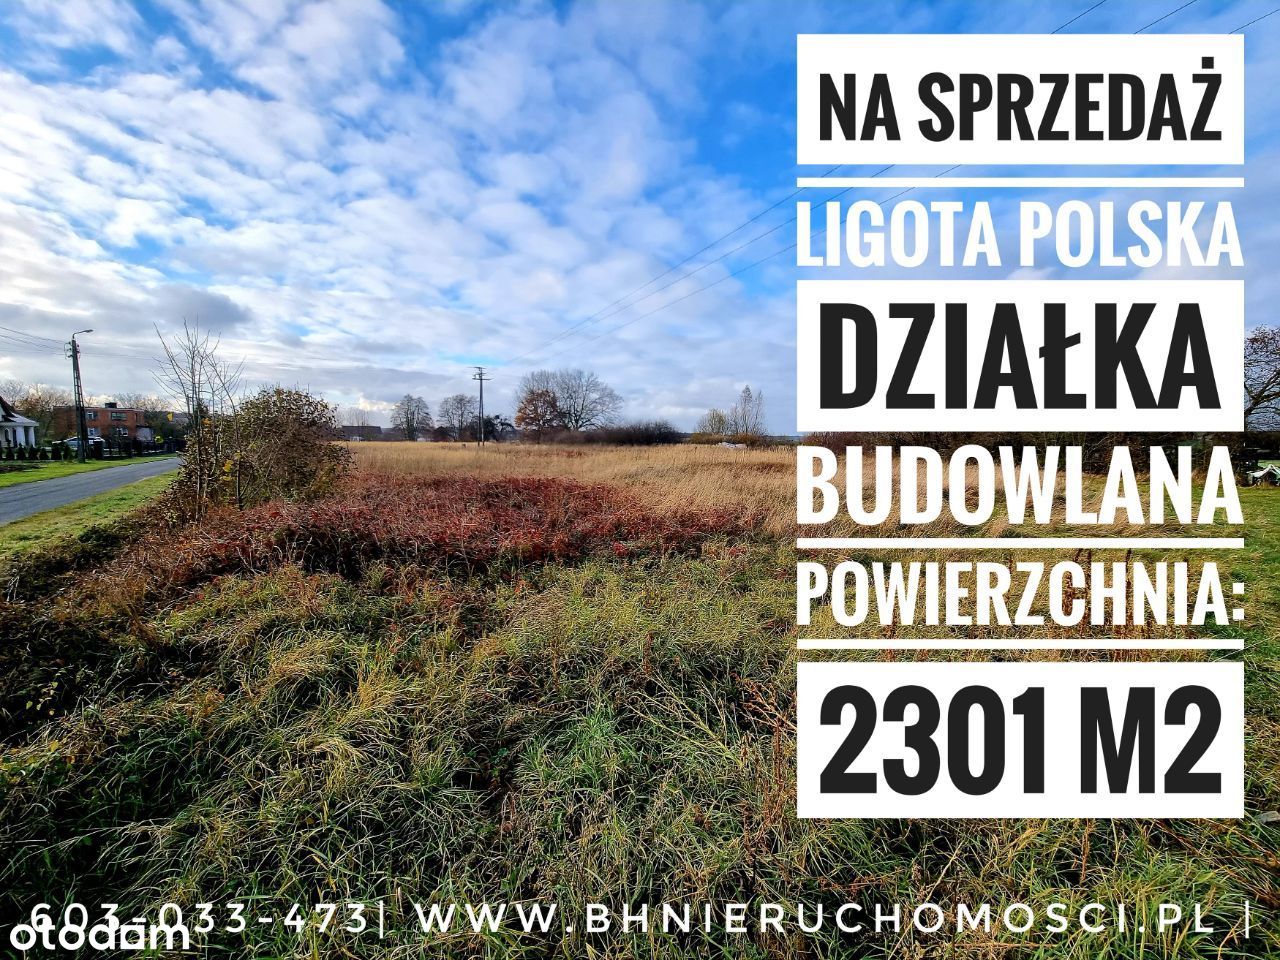 10 km od Oleśnica i 30 km Wrocław I Ligota Polska